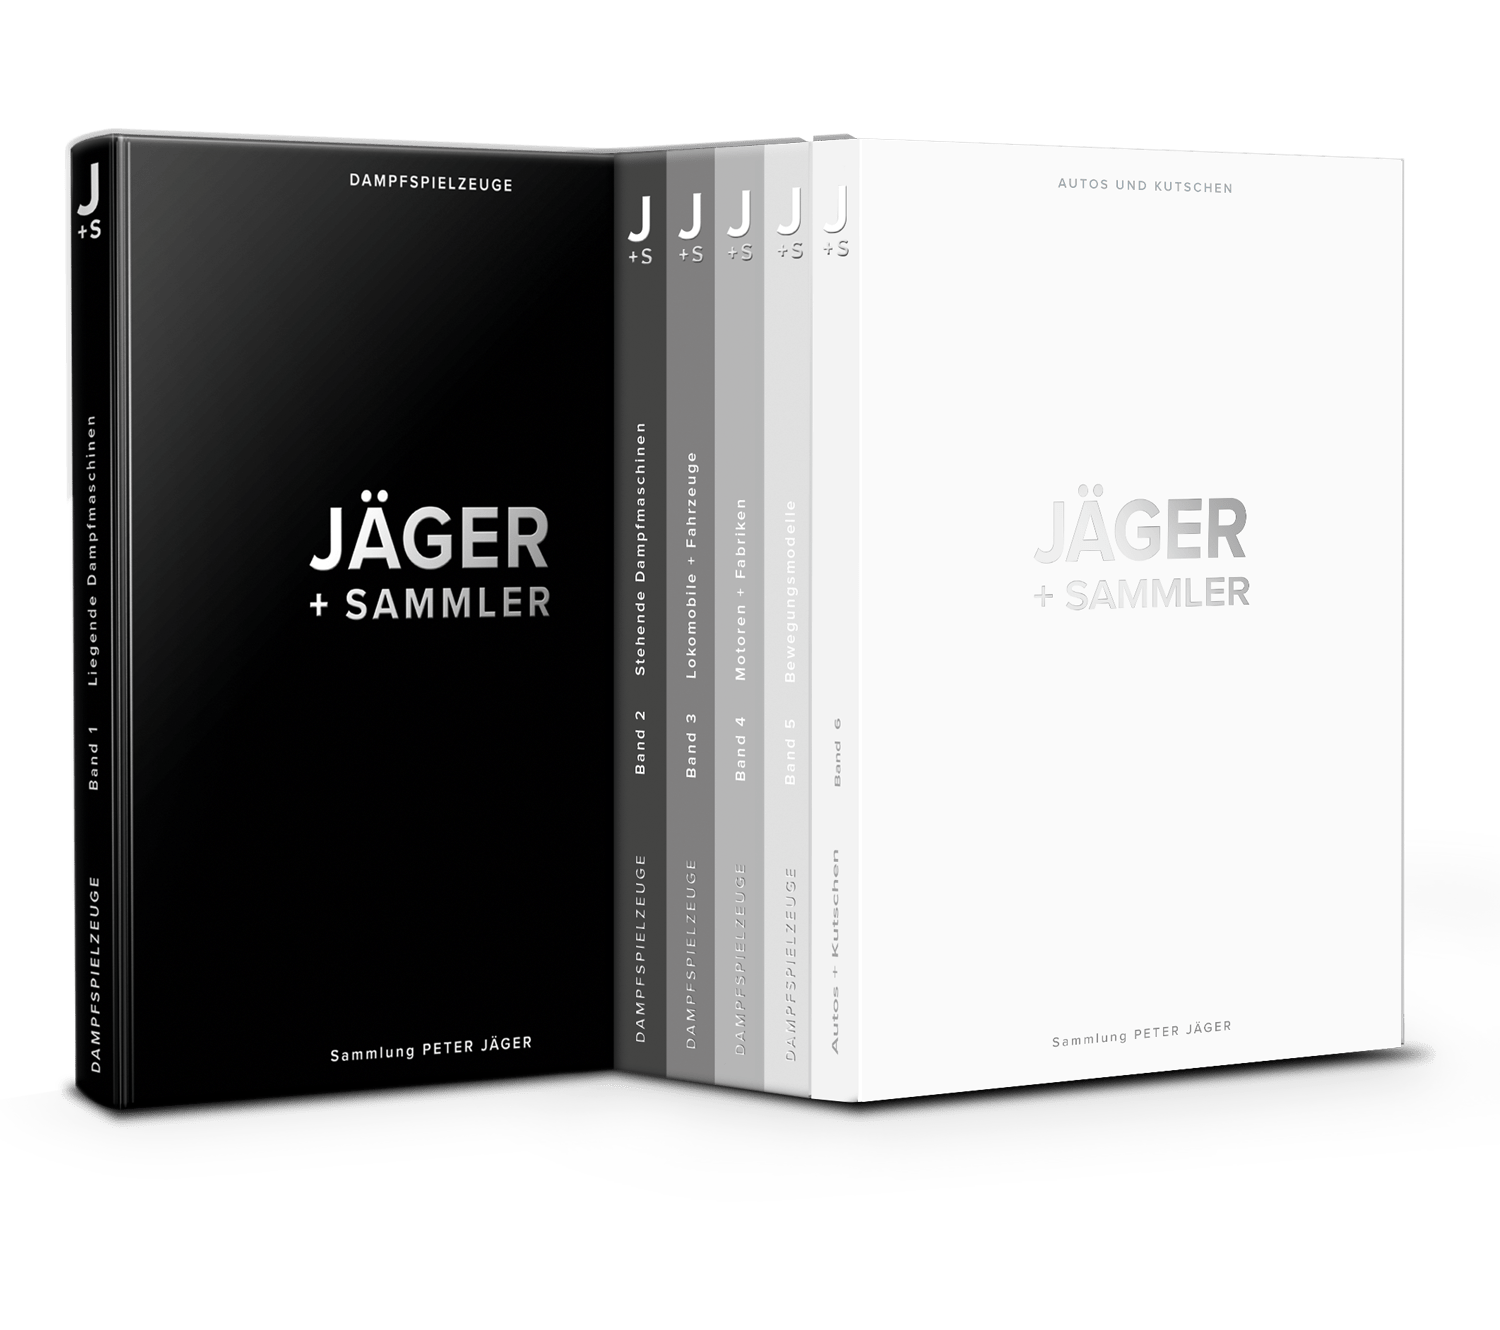 Peter Jäger and his Impressive model steam engines Collection "Jäger + Sammler" Munich